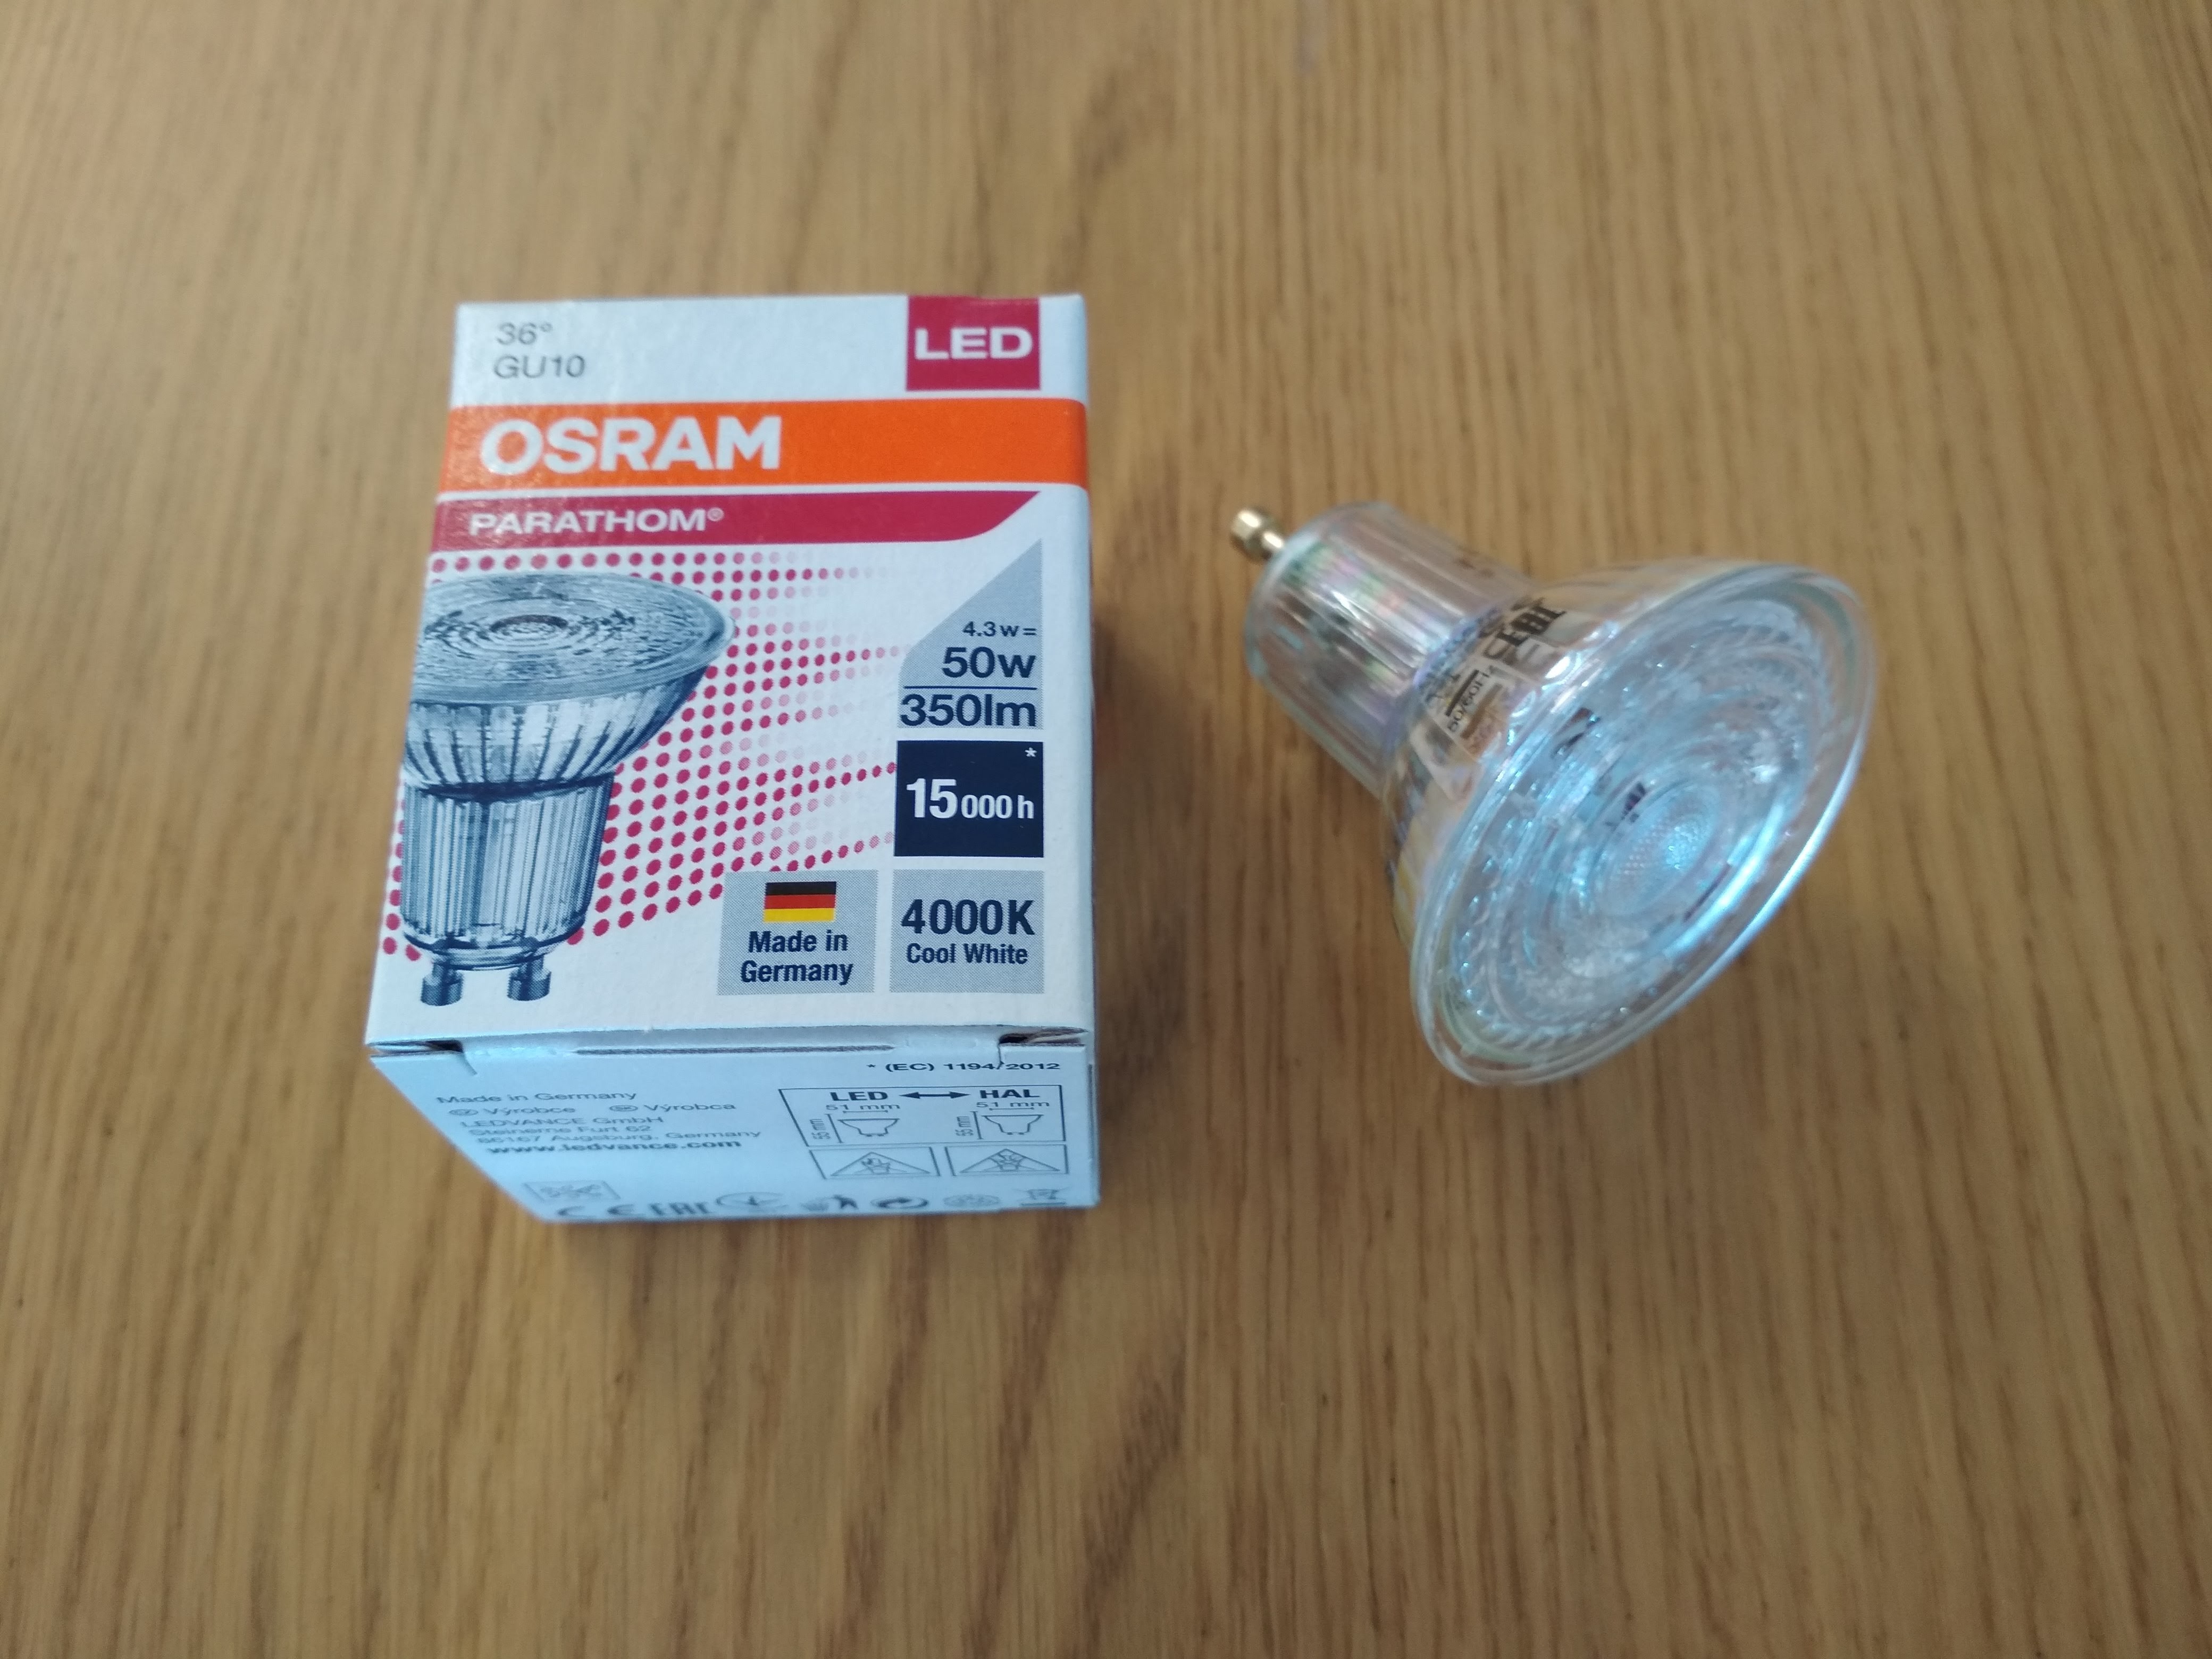 OSRAM 4,3W GU10 żarówka LED